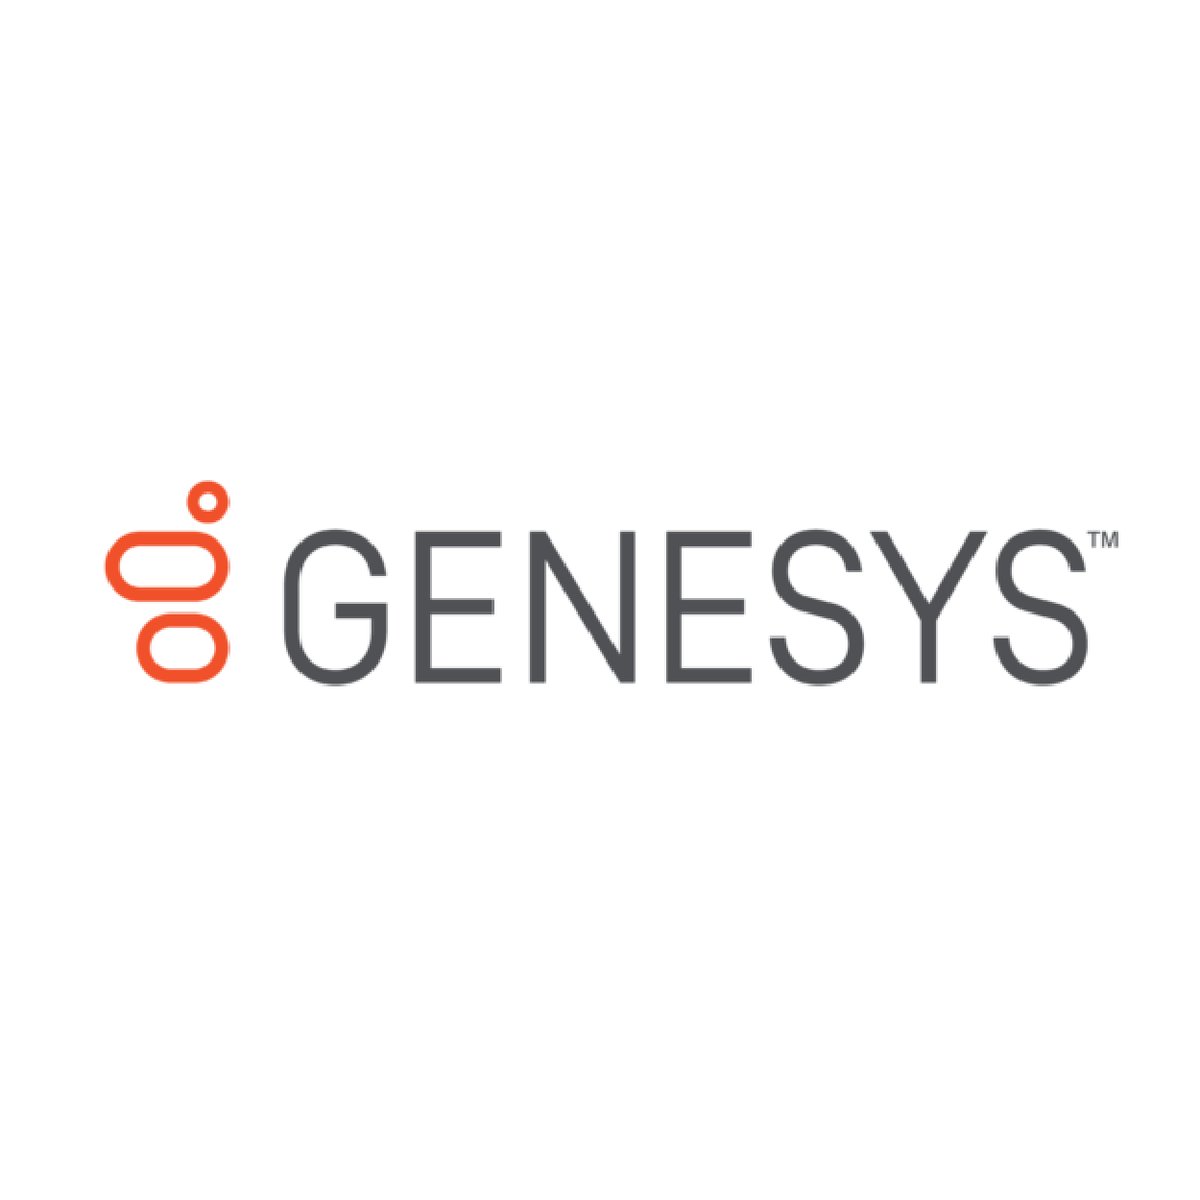 Genesys-01